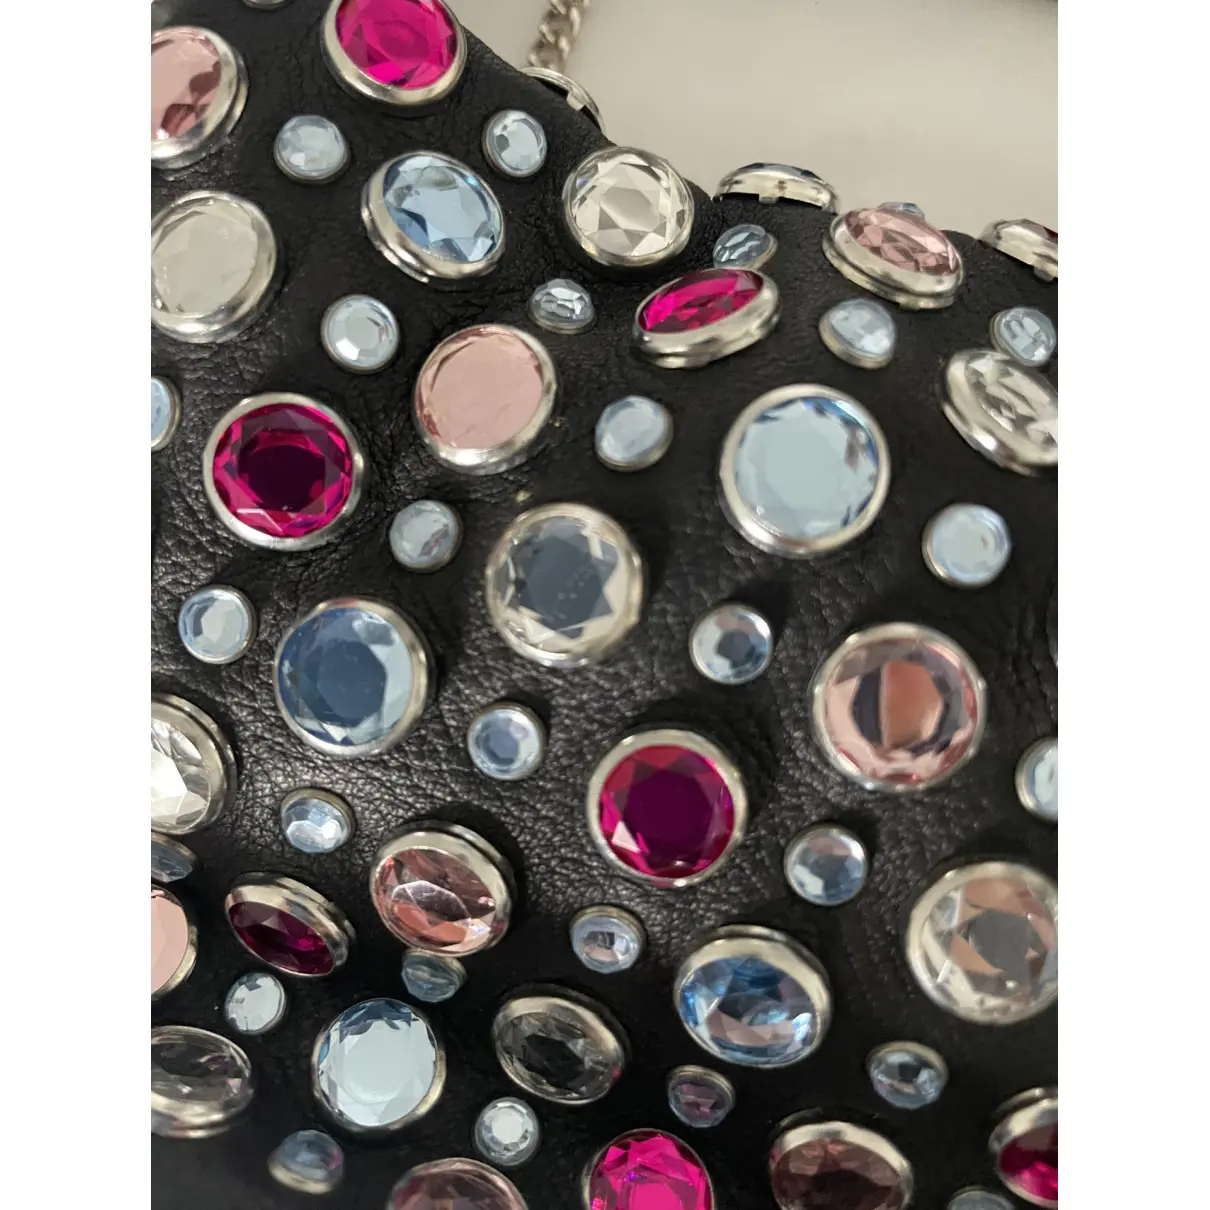 Buy Sonia Rykiel Domino leather handbag online